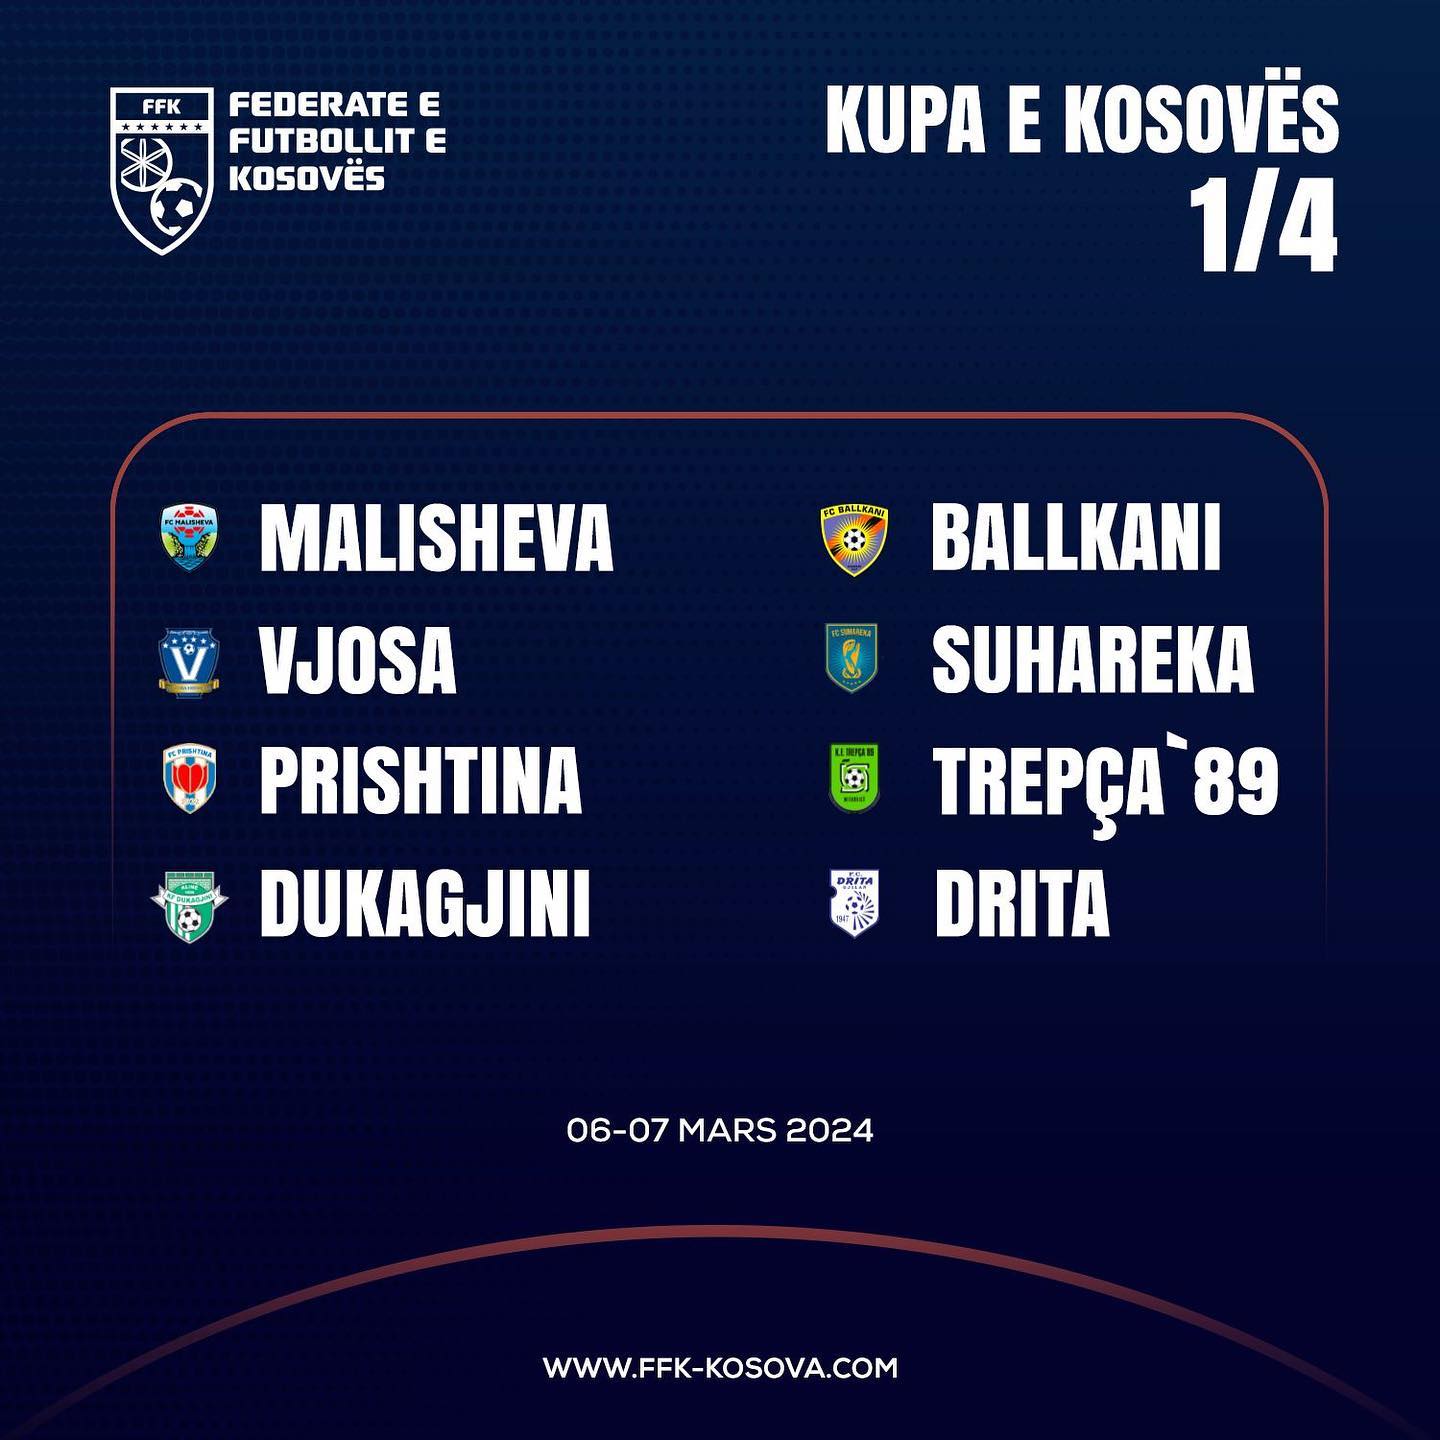 Kupa e Kosoves 2023/24 - Cerekfinalet 